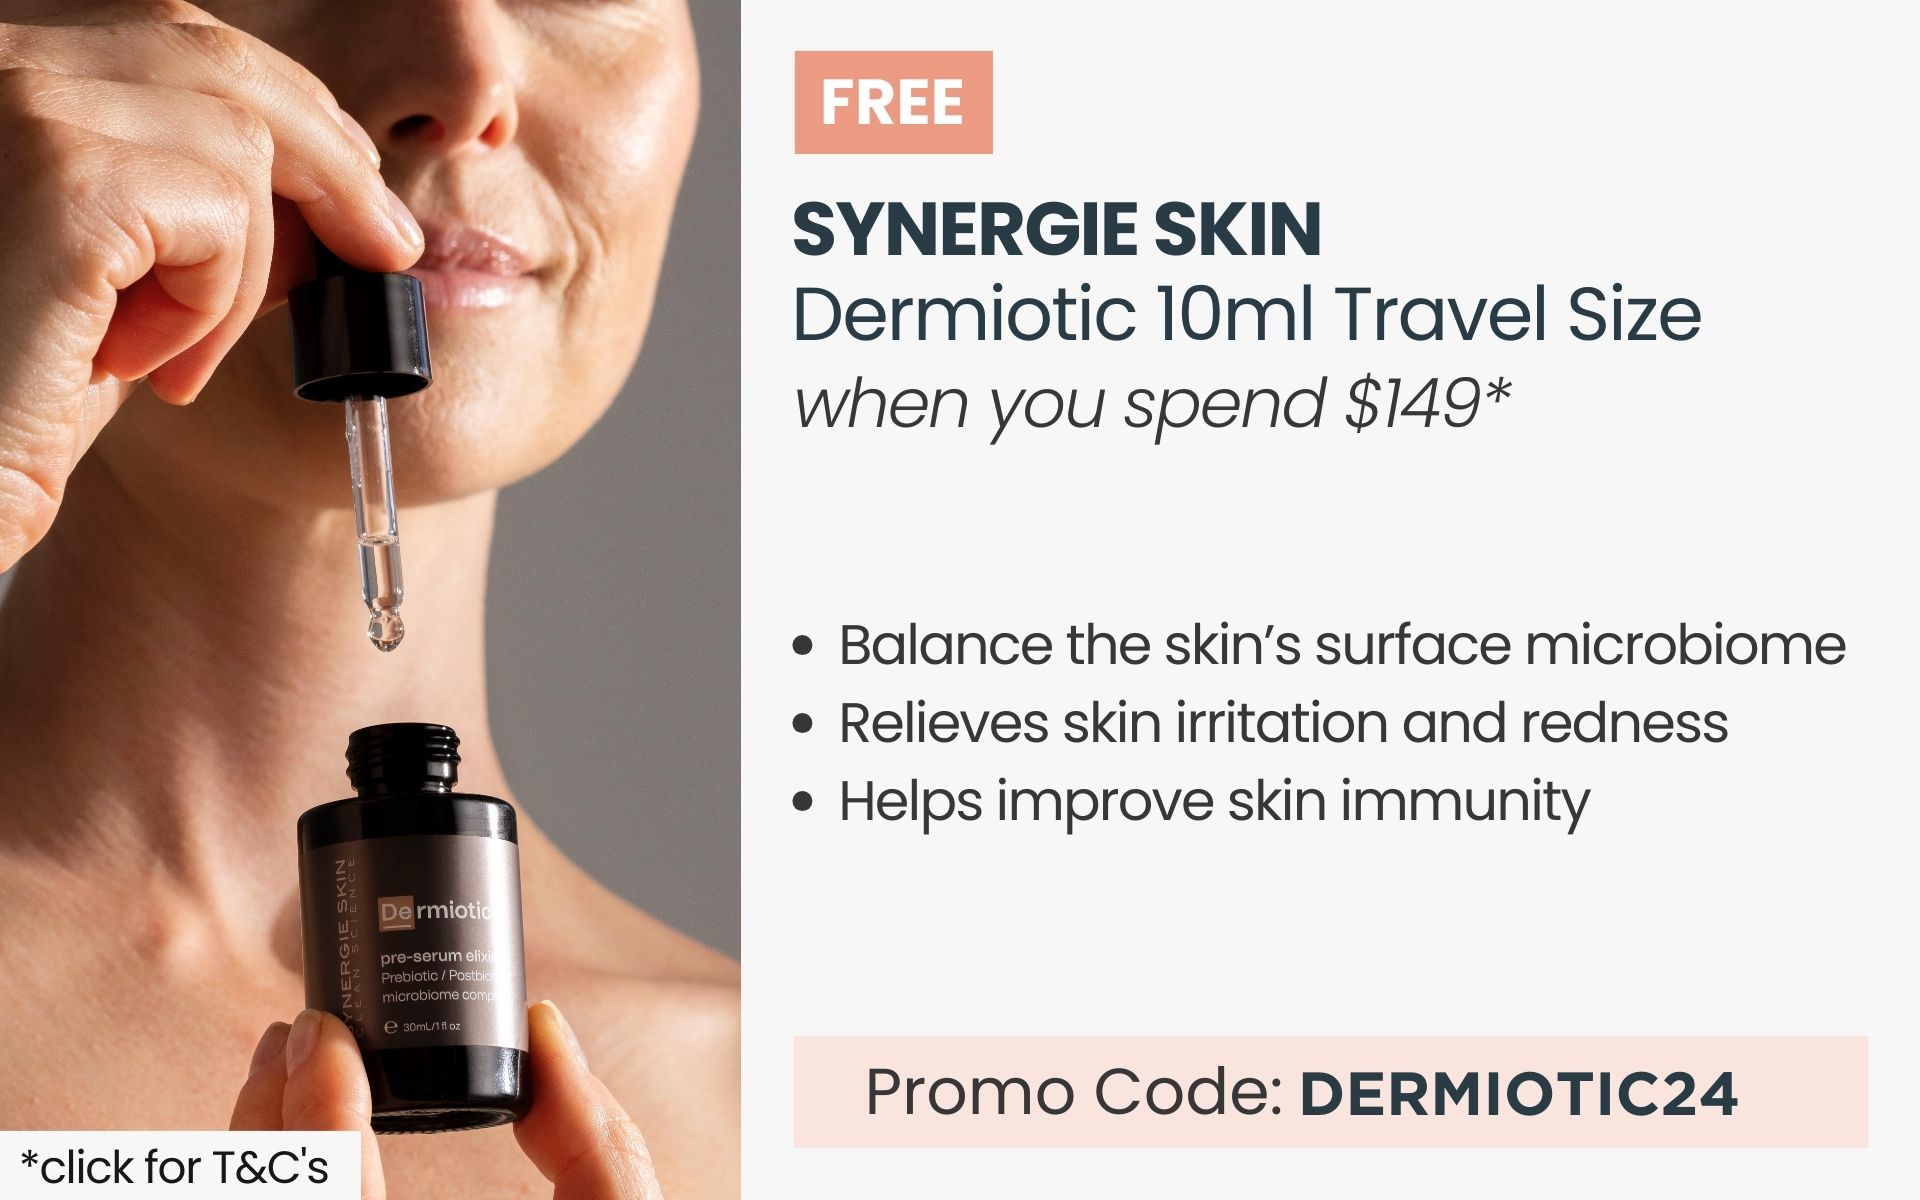 FREE Synergie Skin Dermiotic 10ml Travel Size.  Min spend $149. Promo Code DERMIOTIC24